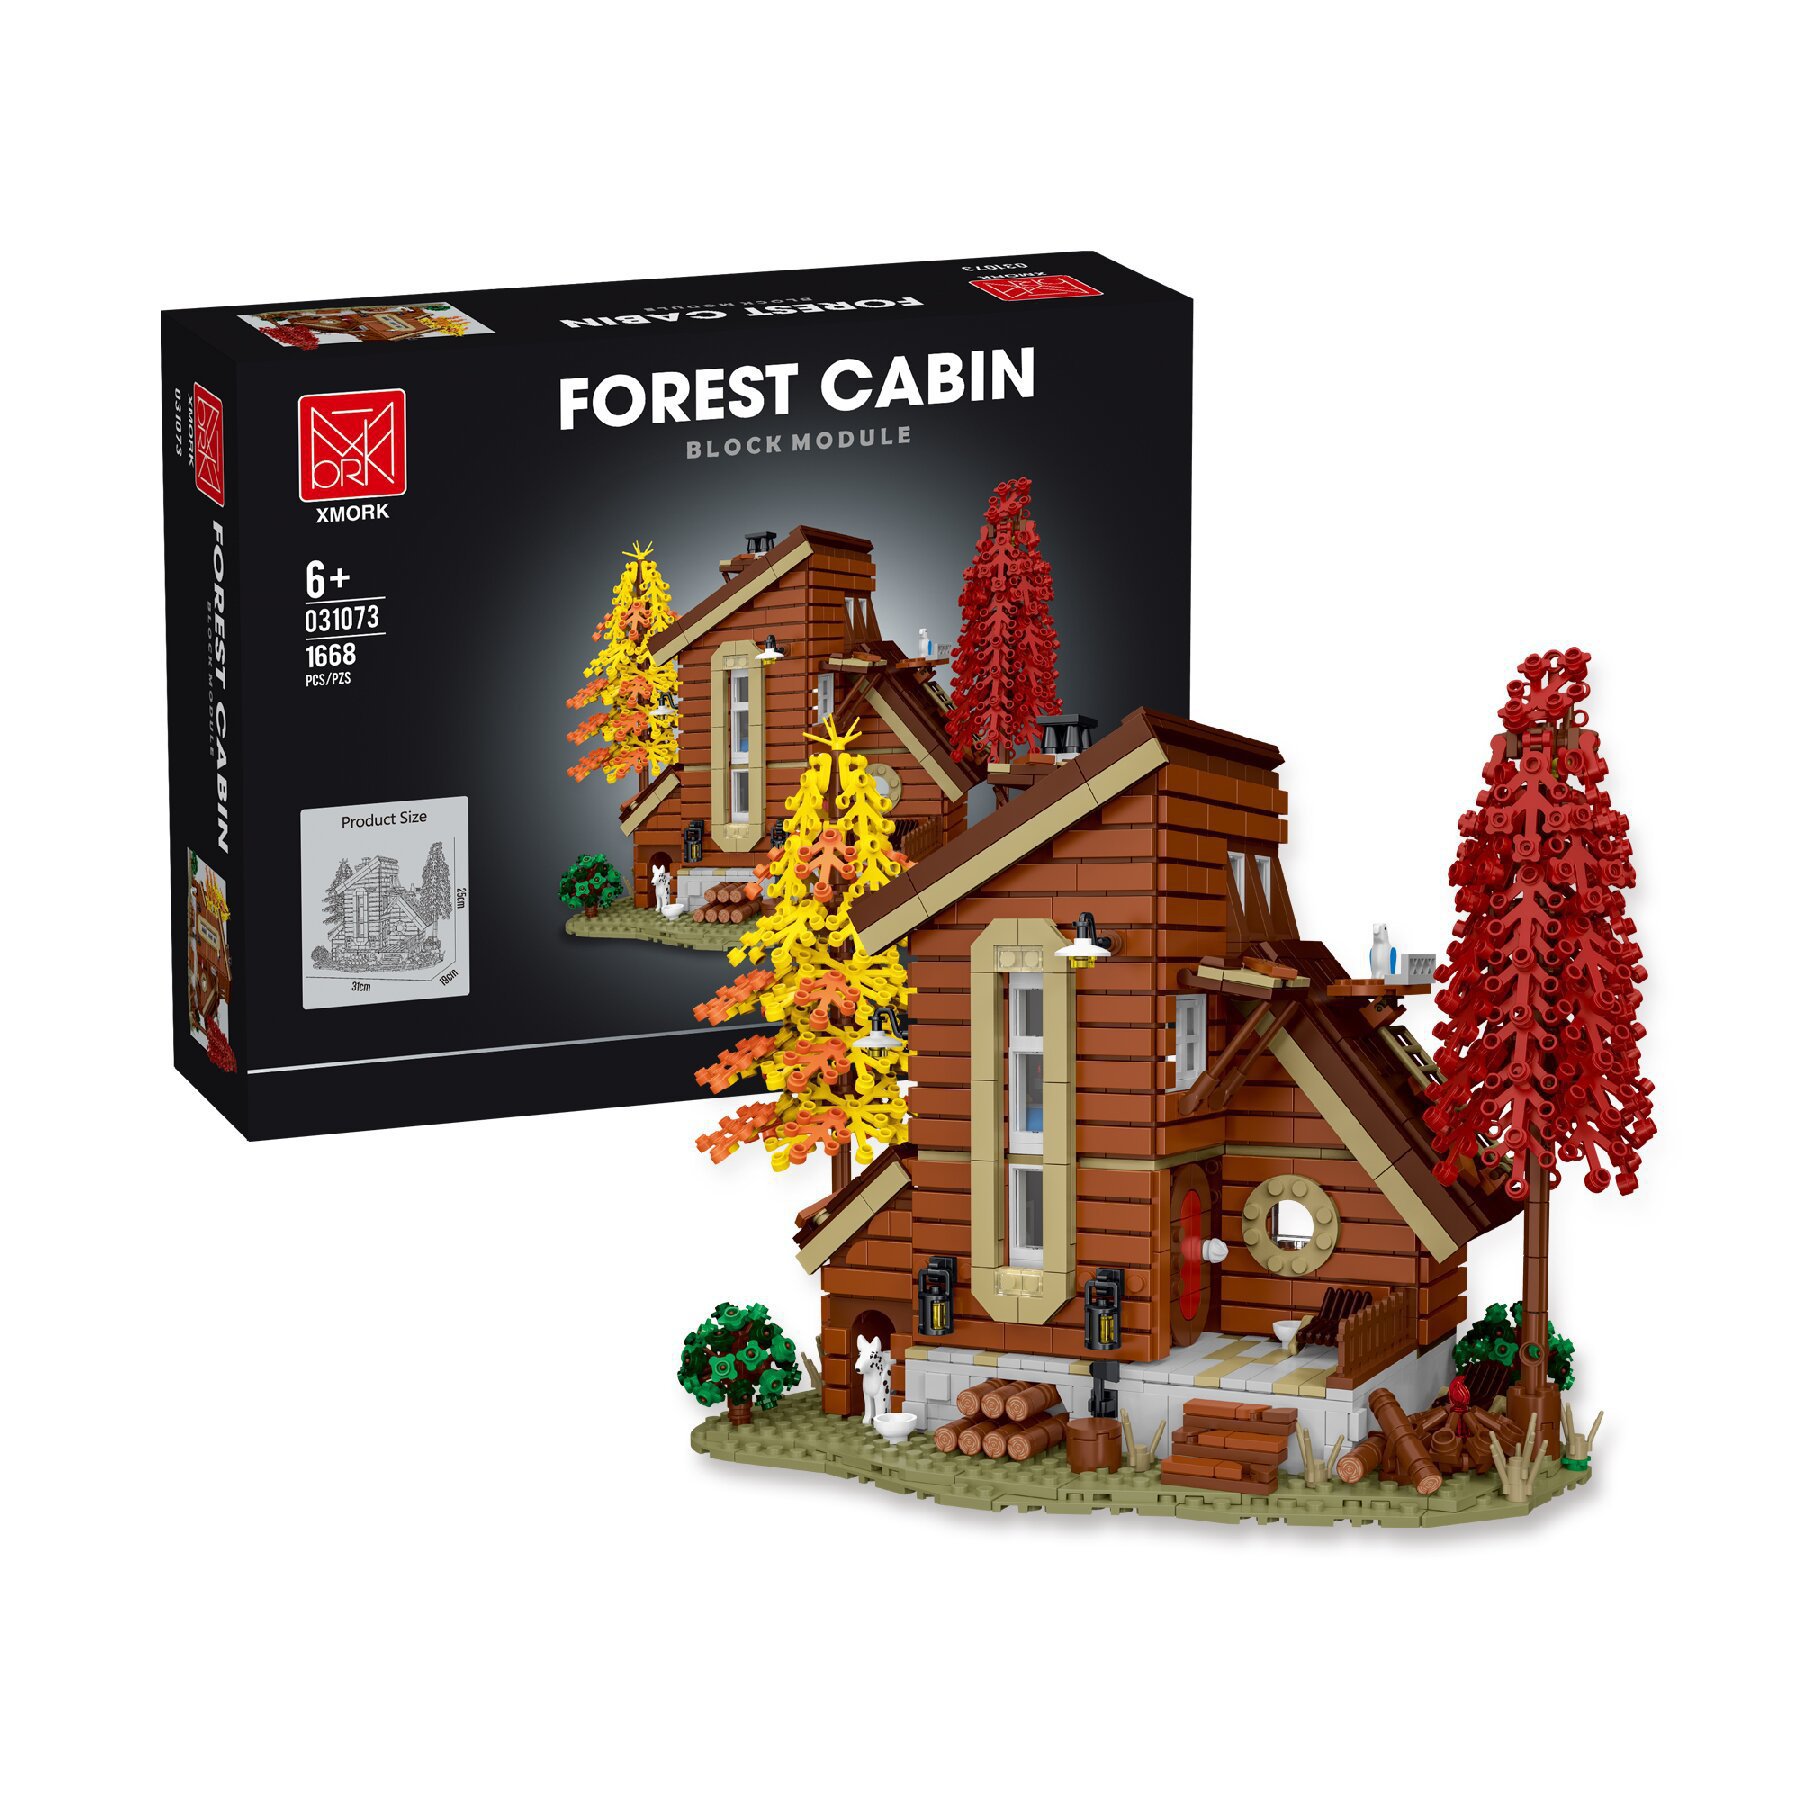 Mork 031073 Forest Cabin